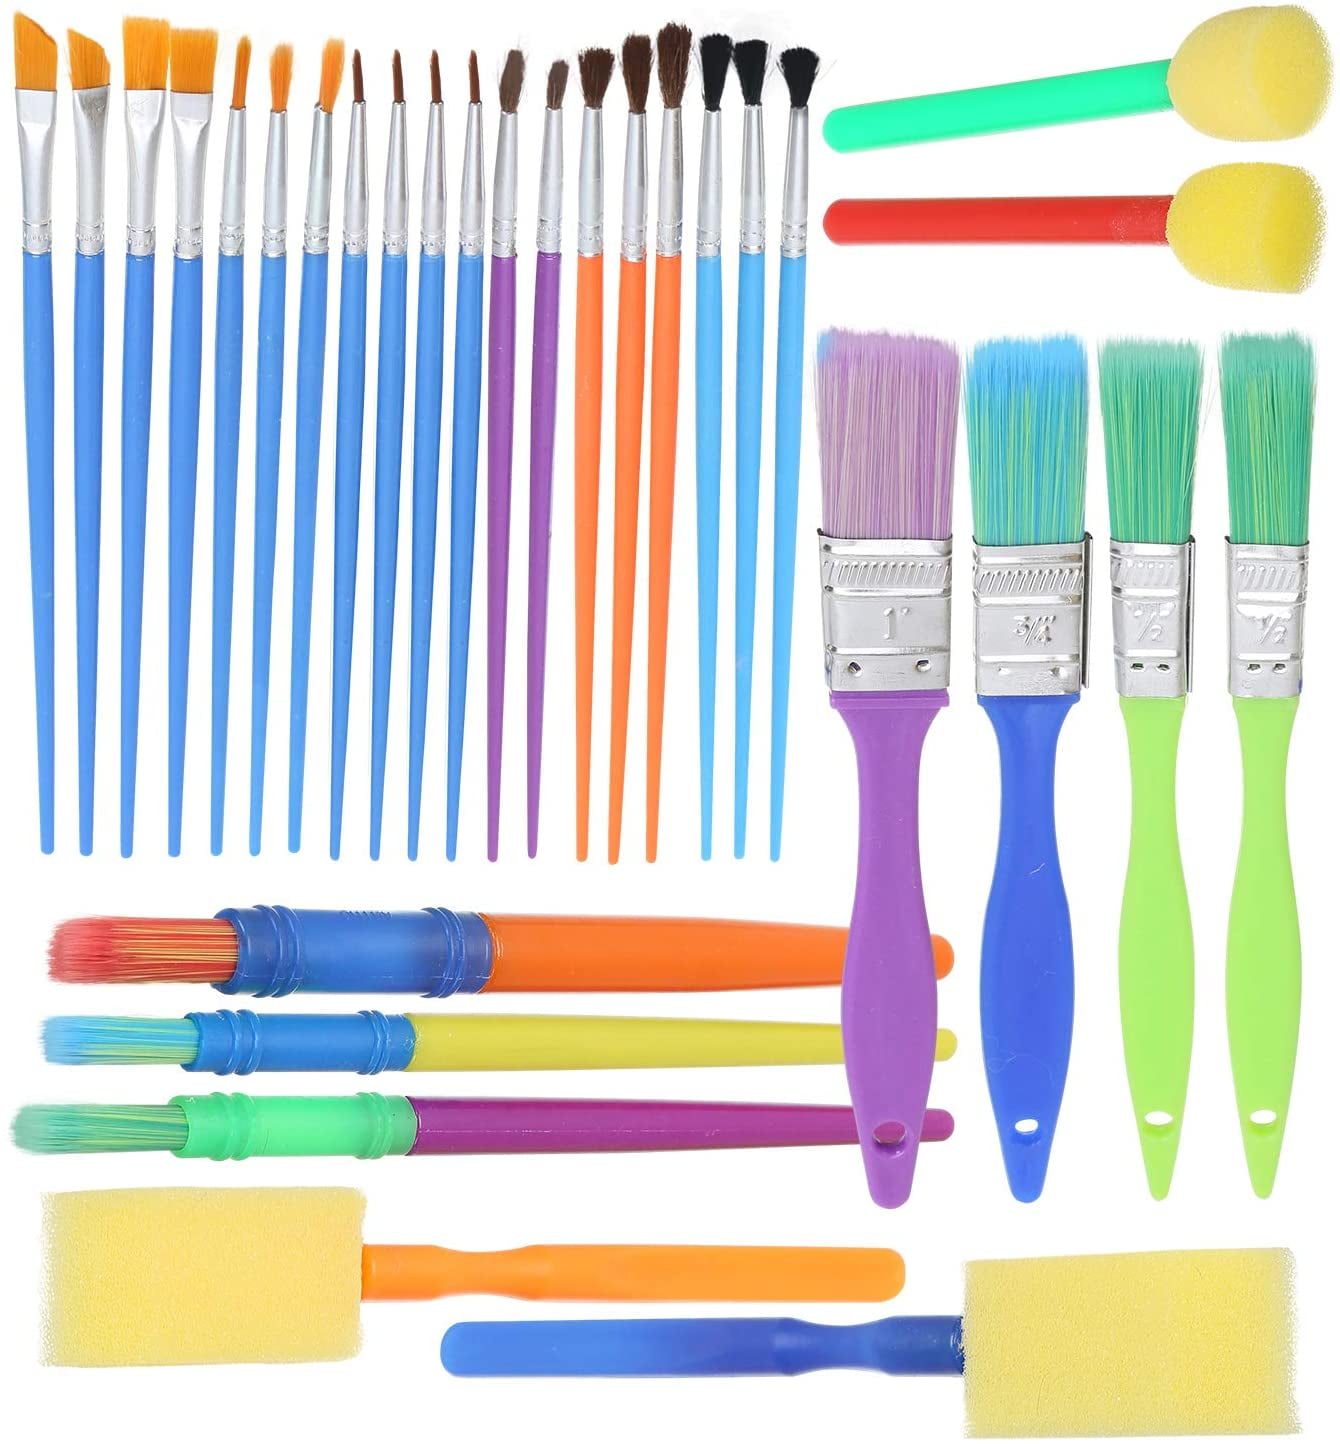  AUREUO Mixed Paint Brush Set 15 Piece Nylon & Bristles